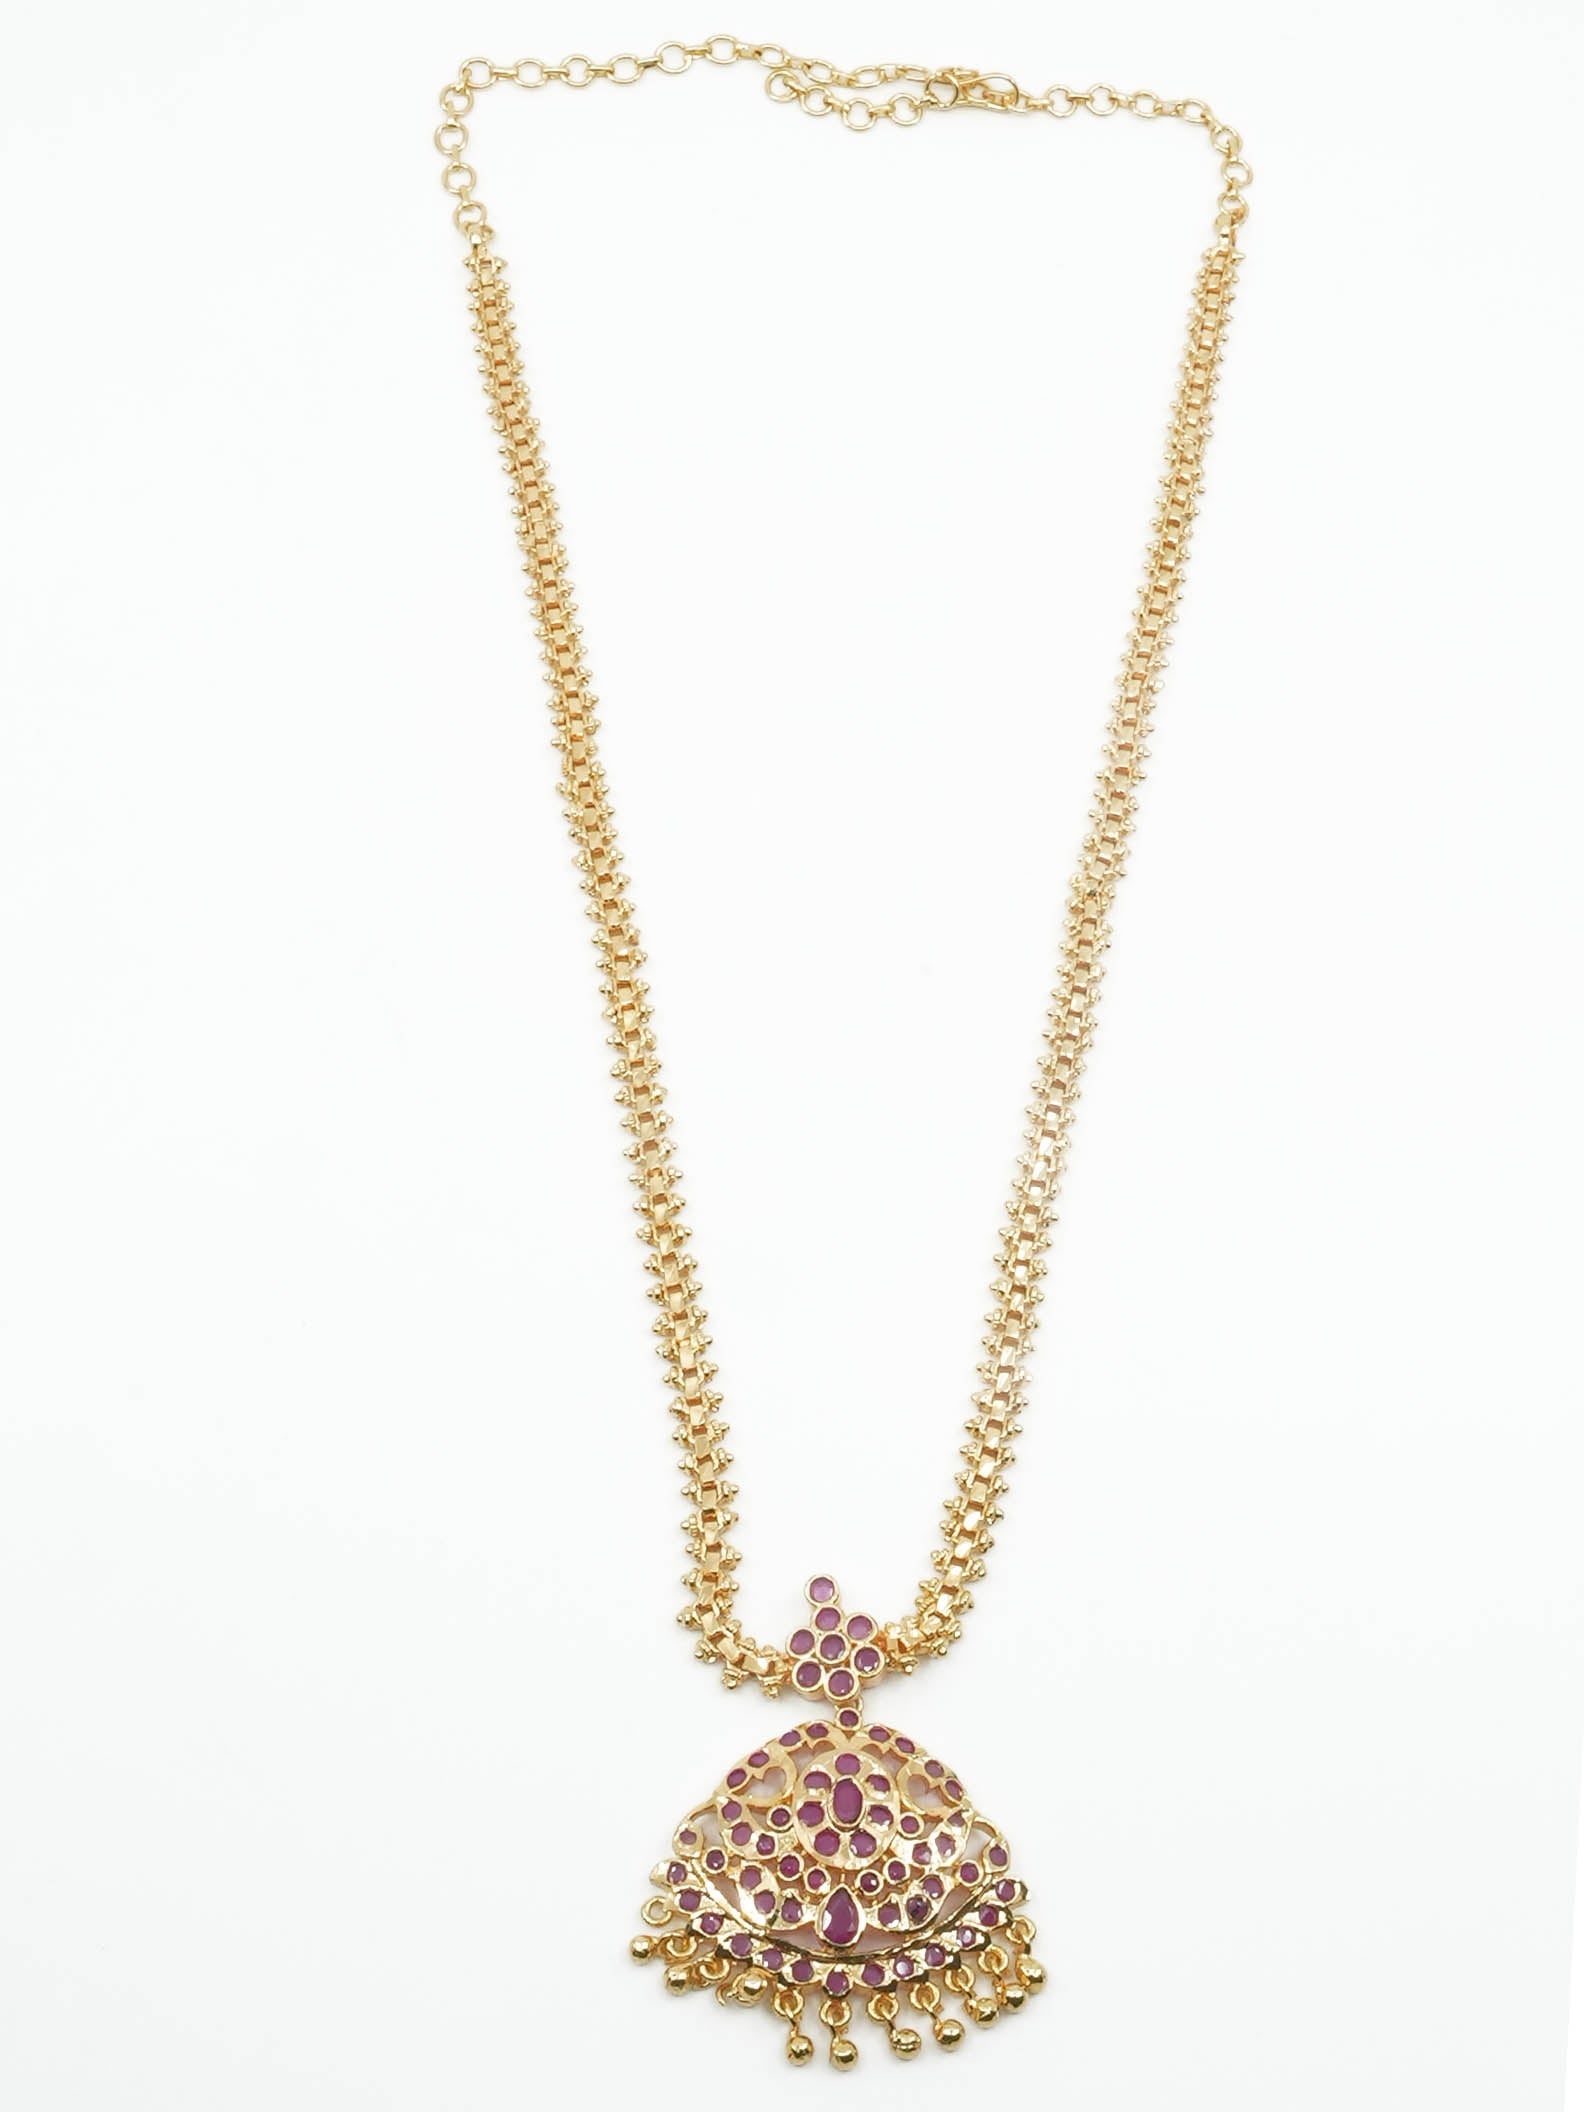 23.5kt Exclusive Premium Gold finish Gatti necklace Combo set 6092N